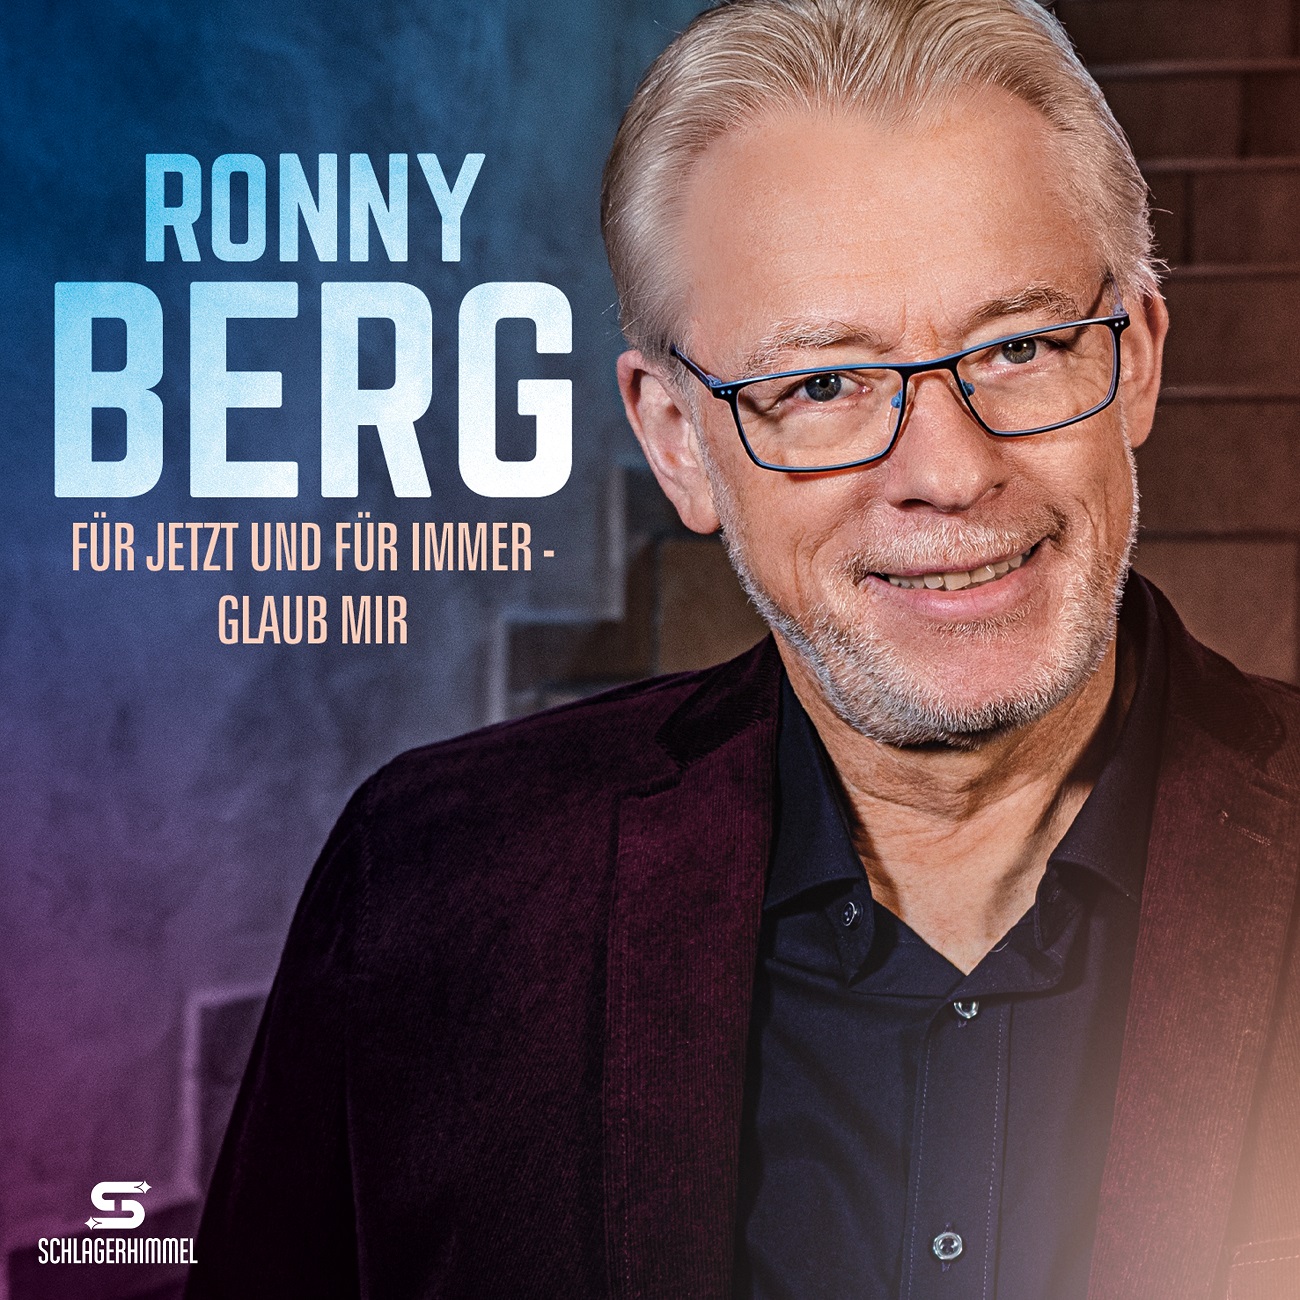 Ronny Berg - Fr jetzt und fr immer - glaub mir - Cover 3000 Logo.jpg